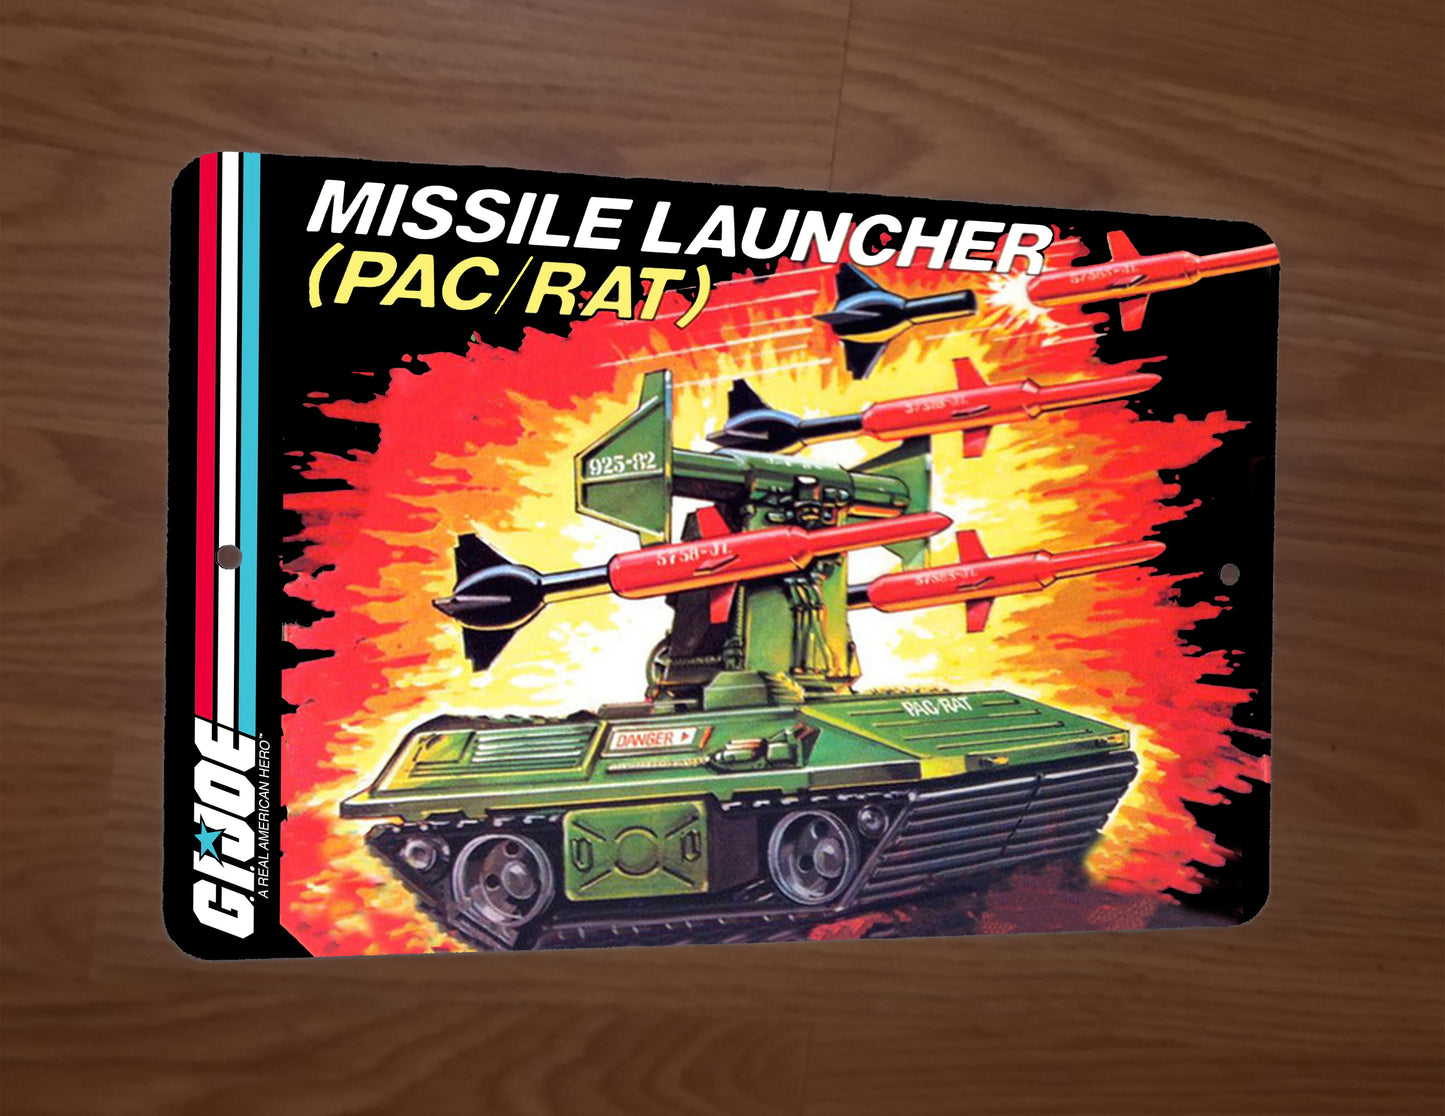 GI Joe Missile Launcher PAC RAT Art 8x12 Metal Wall Sign Retro 80s Cartoon